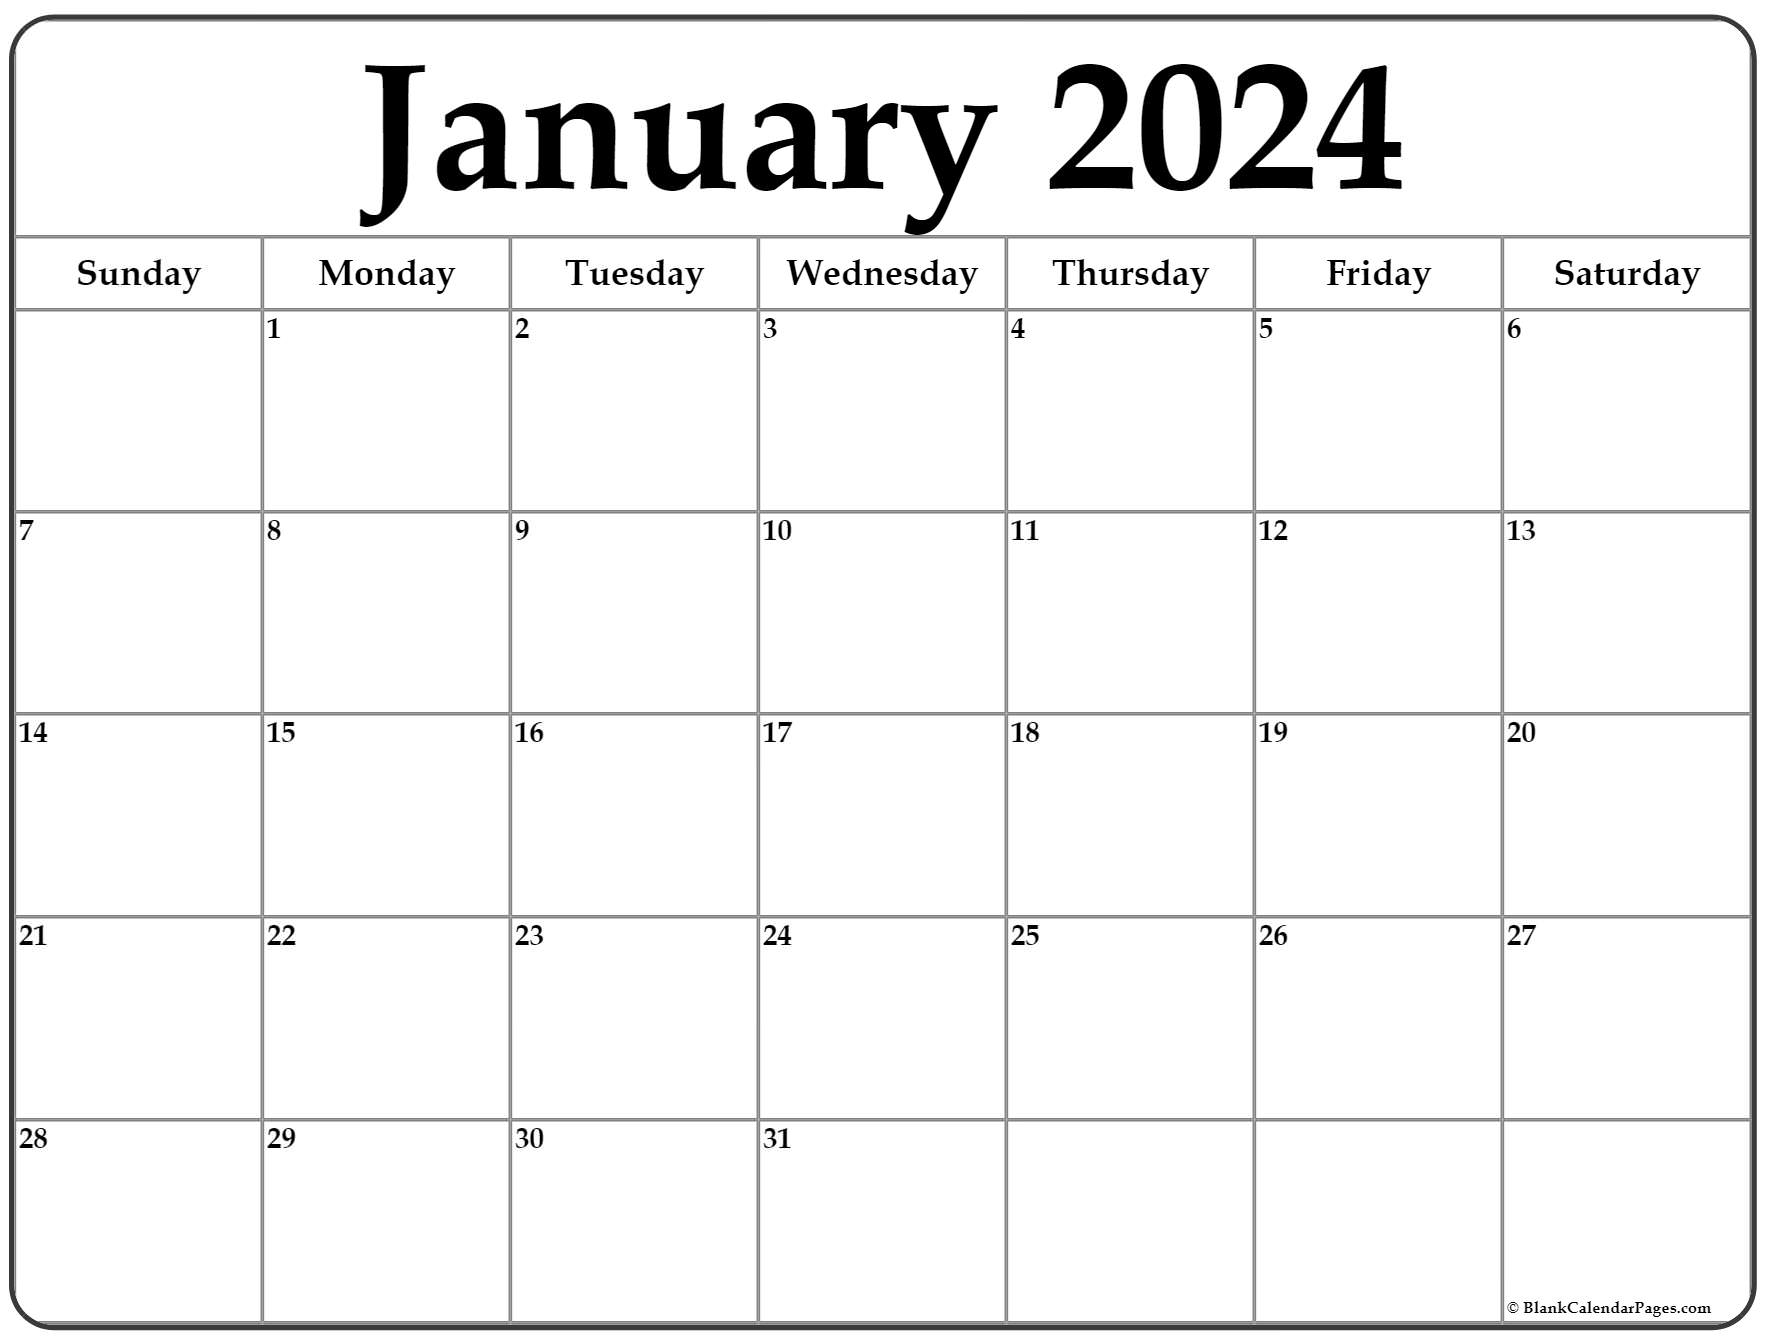 January 2024 Calendar | Free Printable Calendar for 2024 Monthly Free Printable Calendar